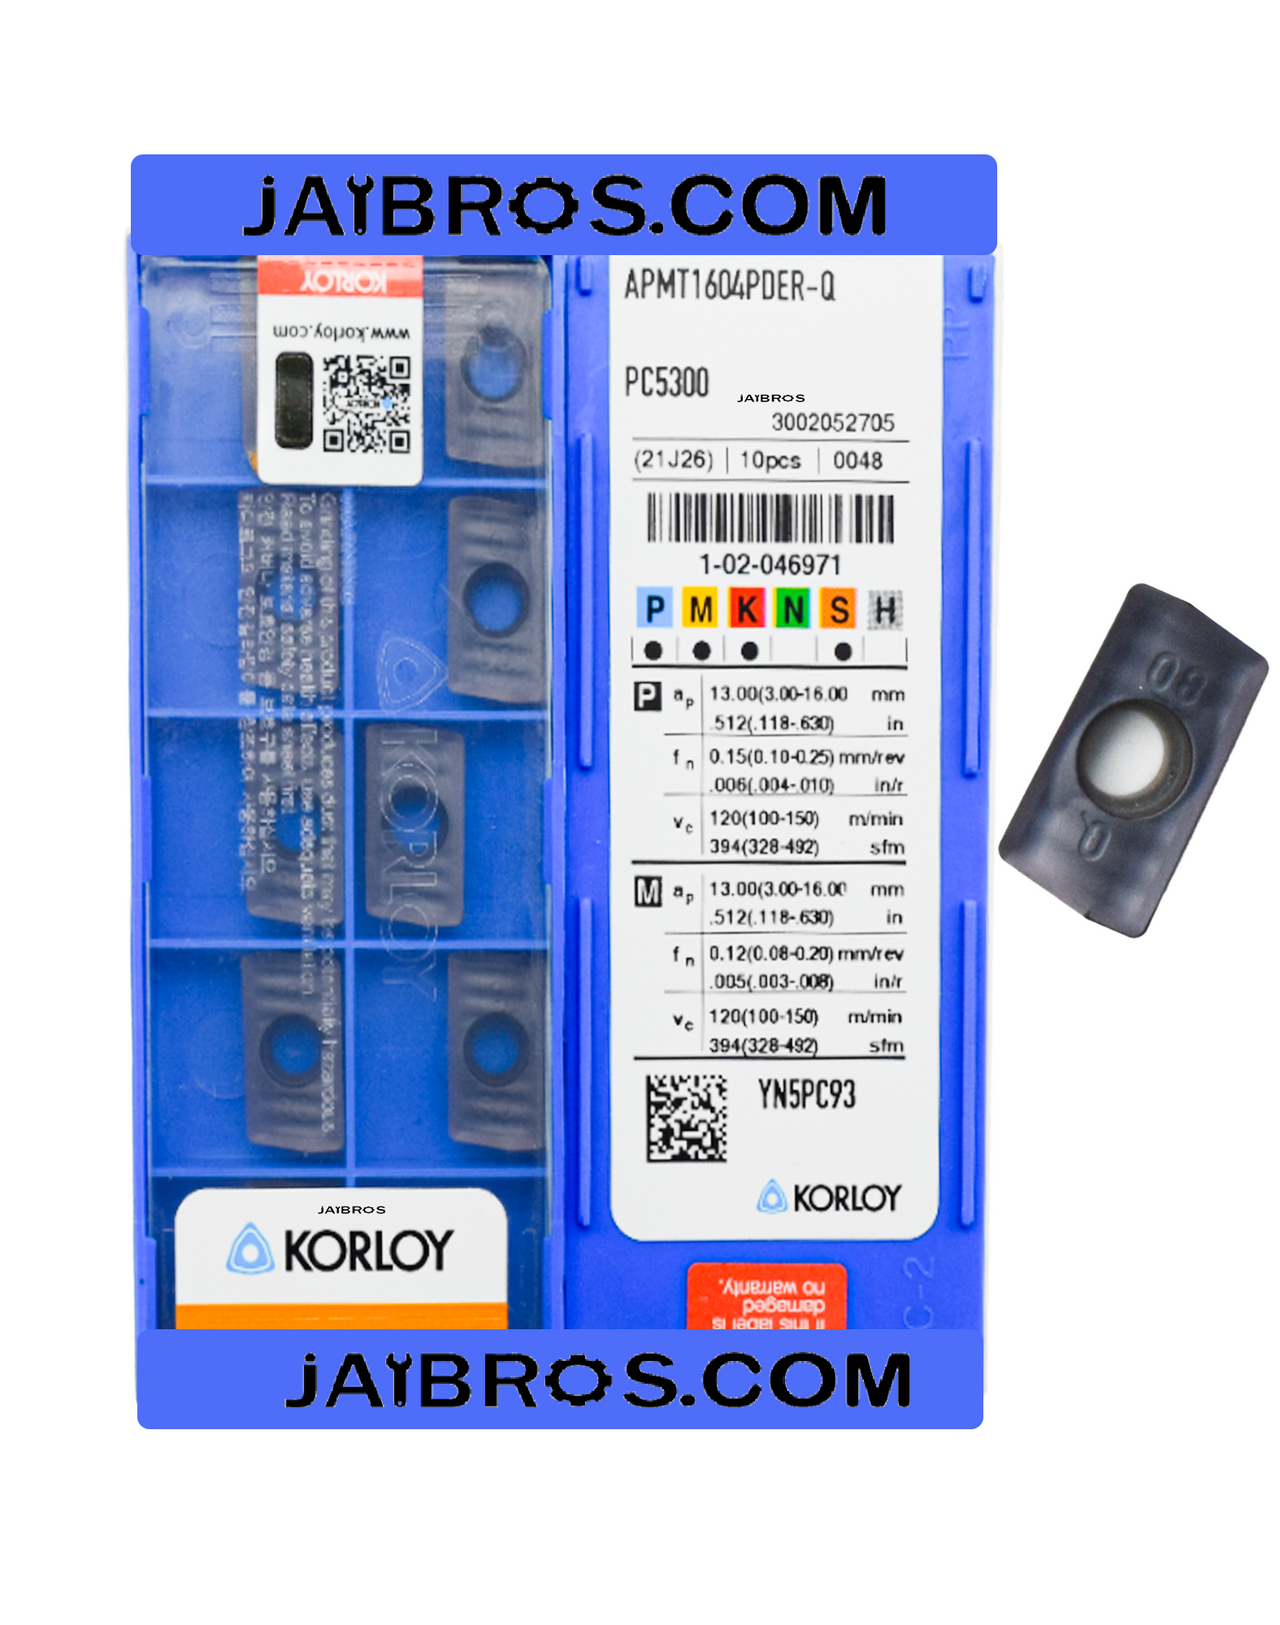 Korloy APMT1604 pder pc5300 Carbide Insert pack of 10